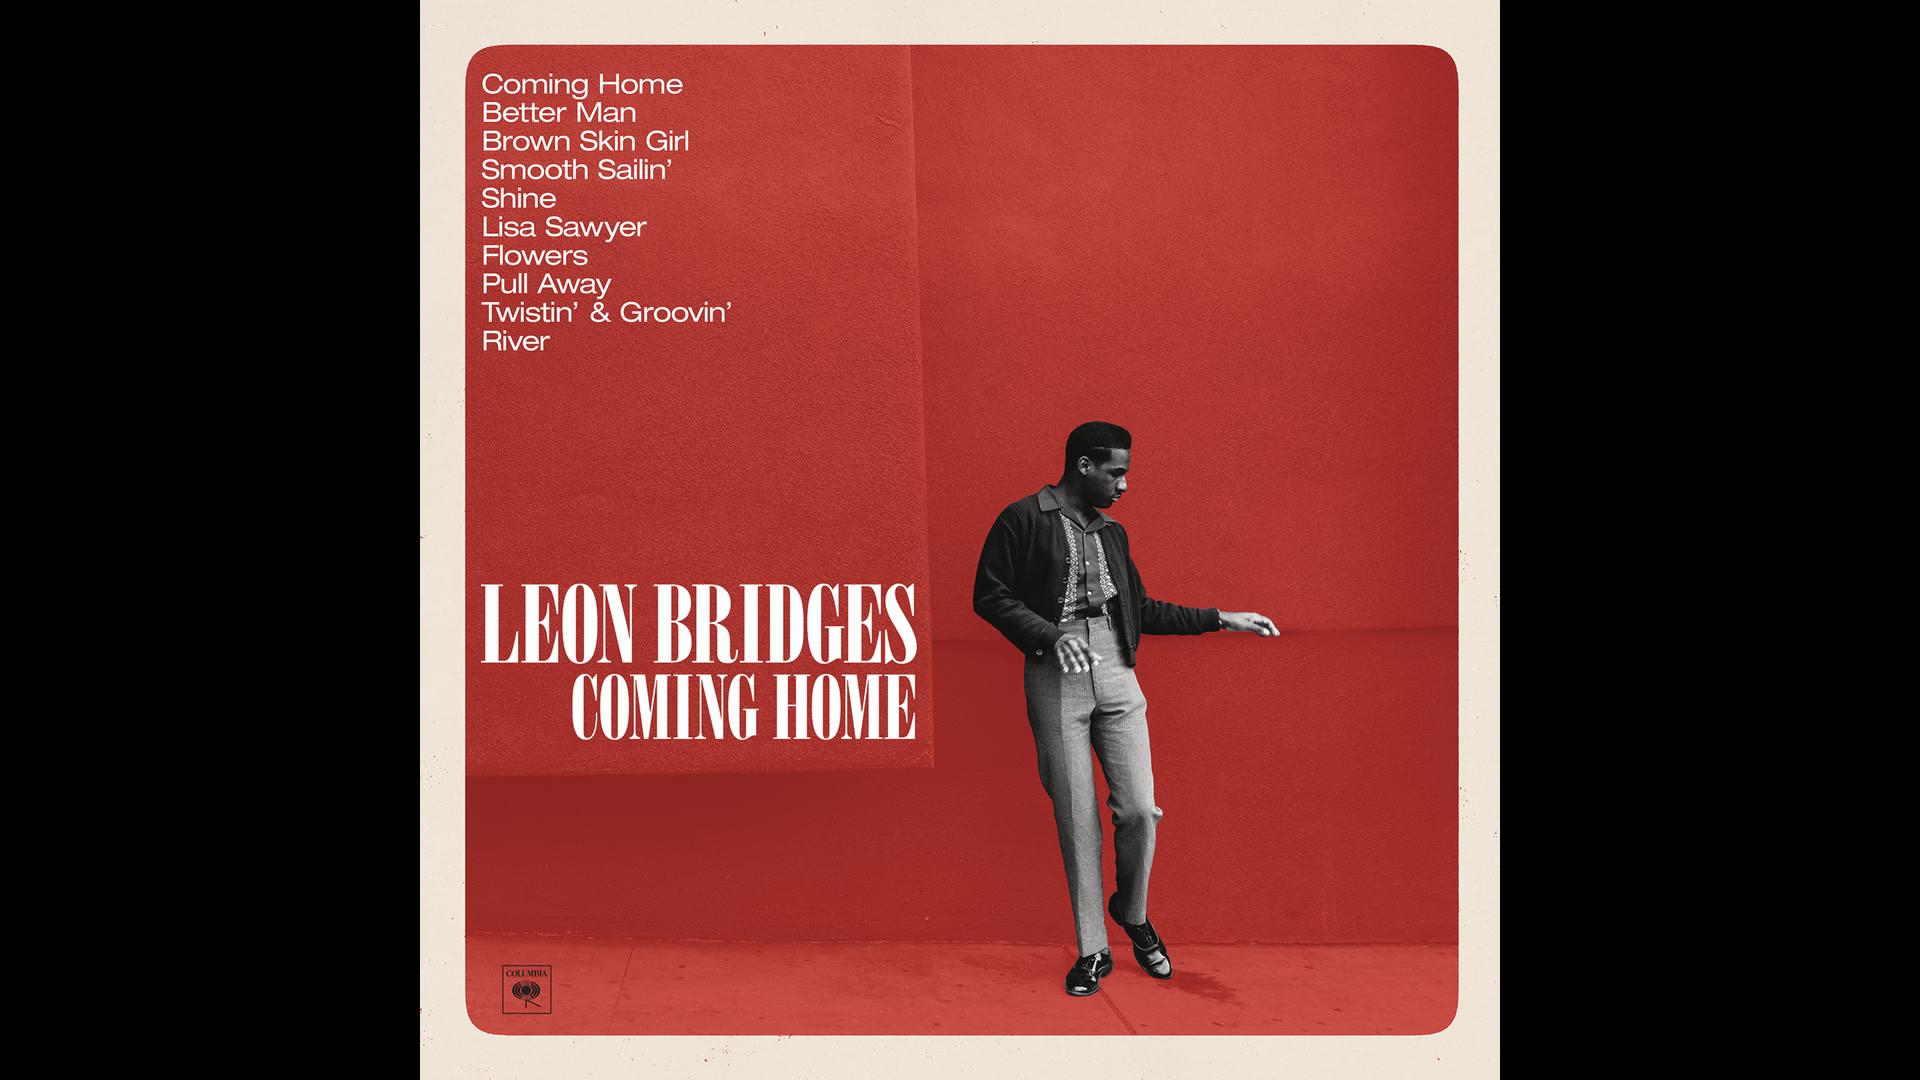 Leon Bridges - Brown Skin Girl (Official Audio)